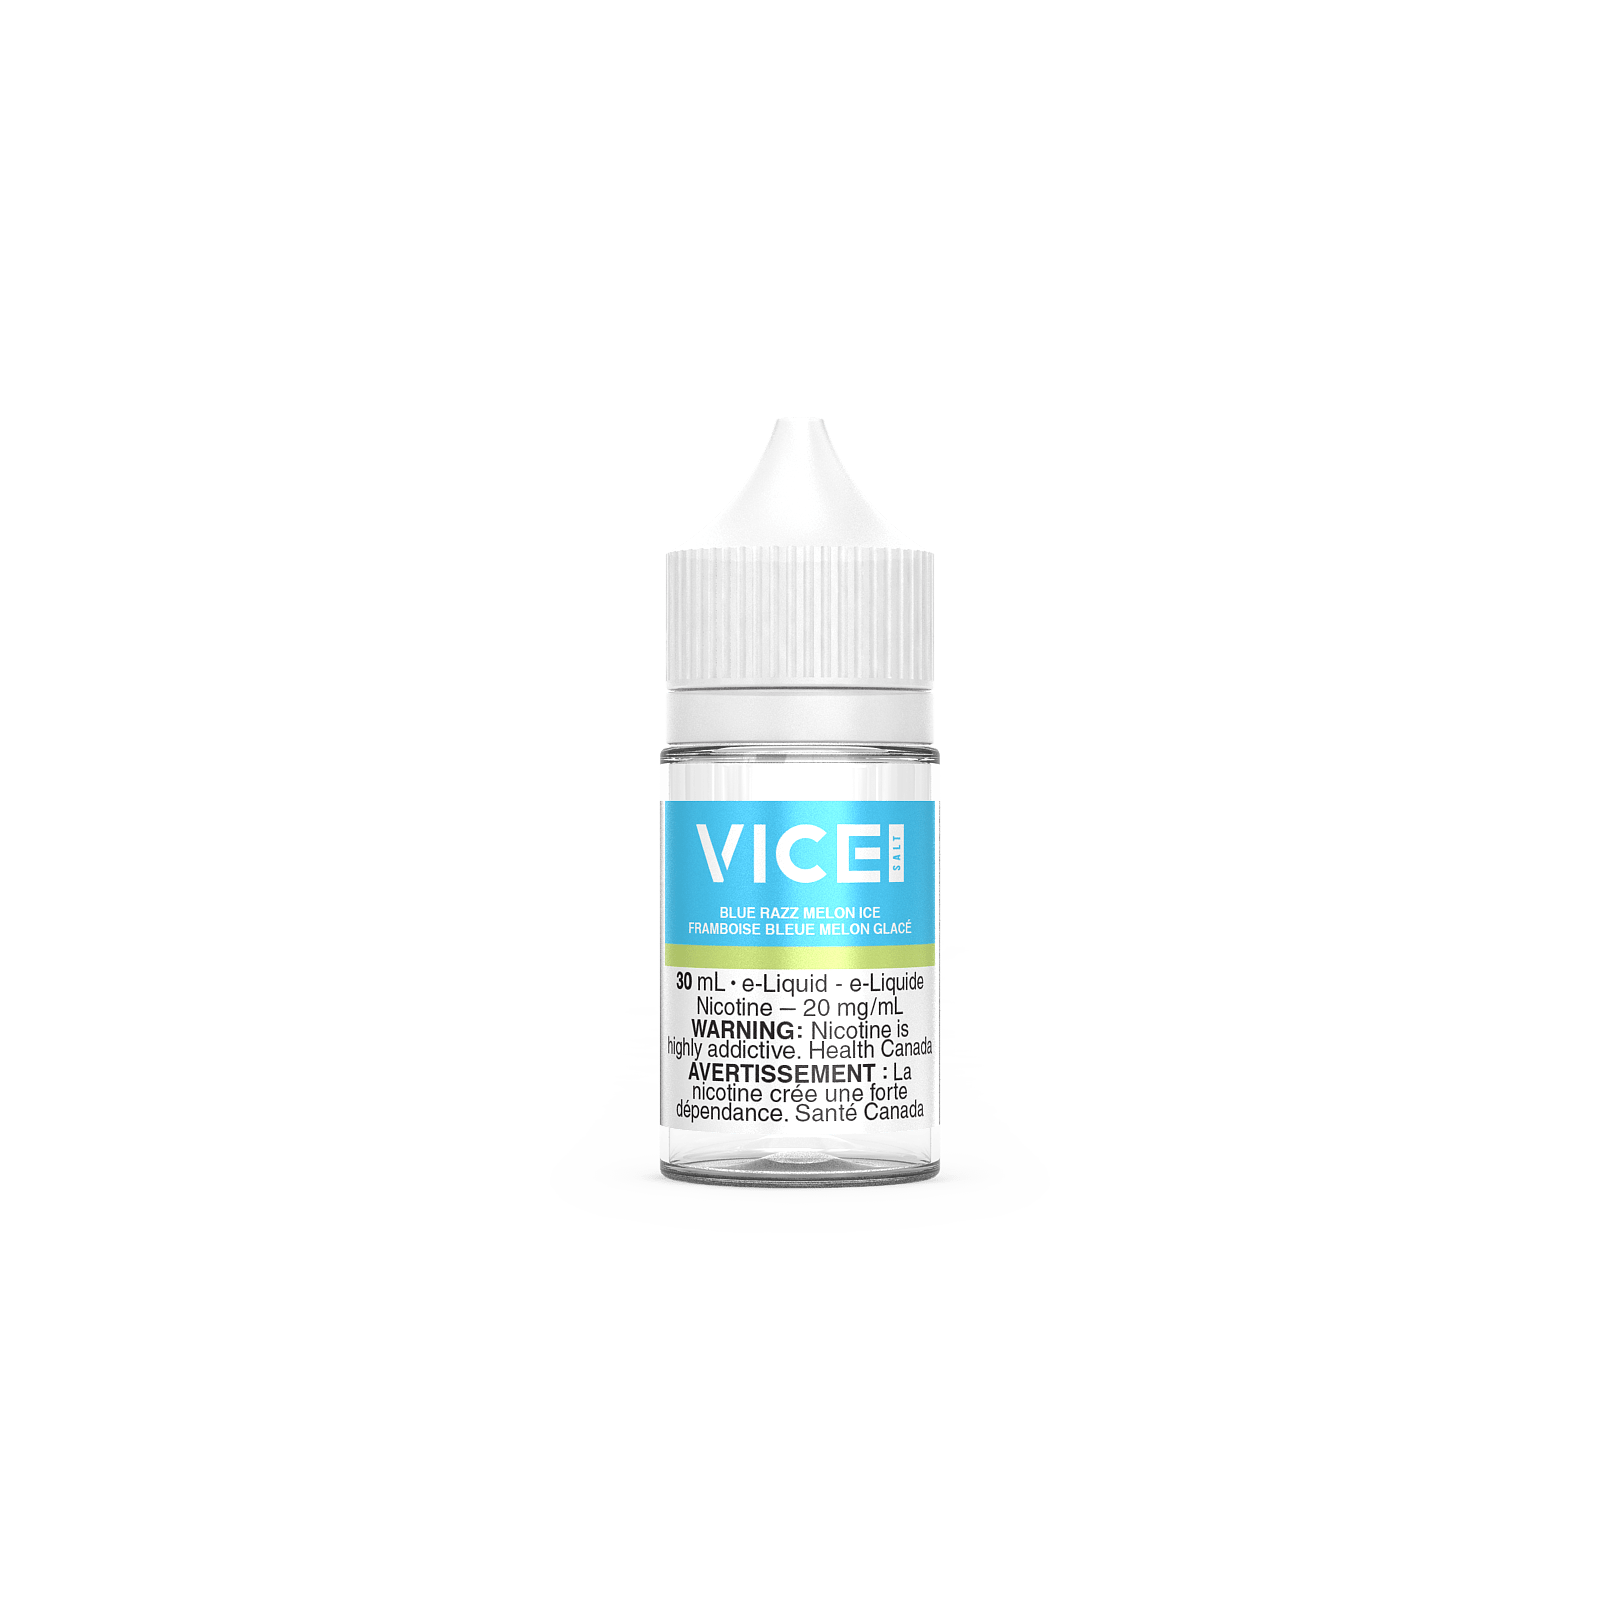 Vice Salt - Blue Razz Melon Ice Nic Salt E-Liquid available on Canada online vape shop